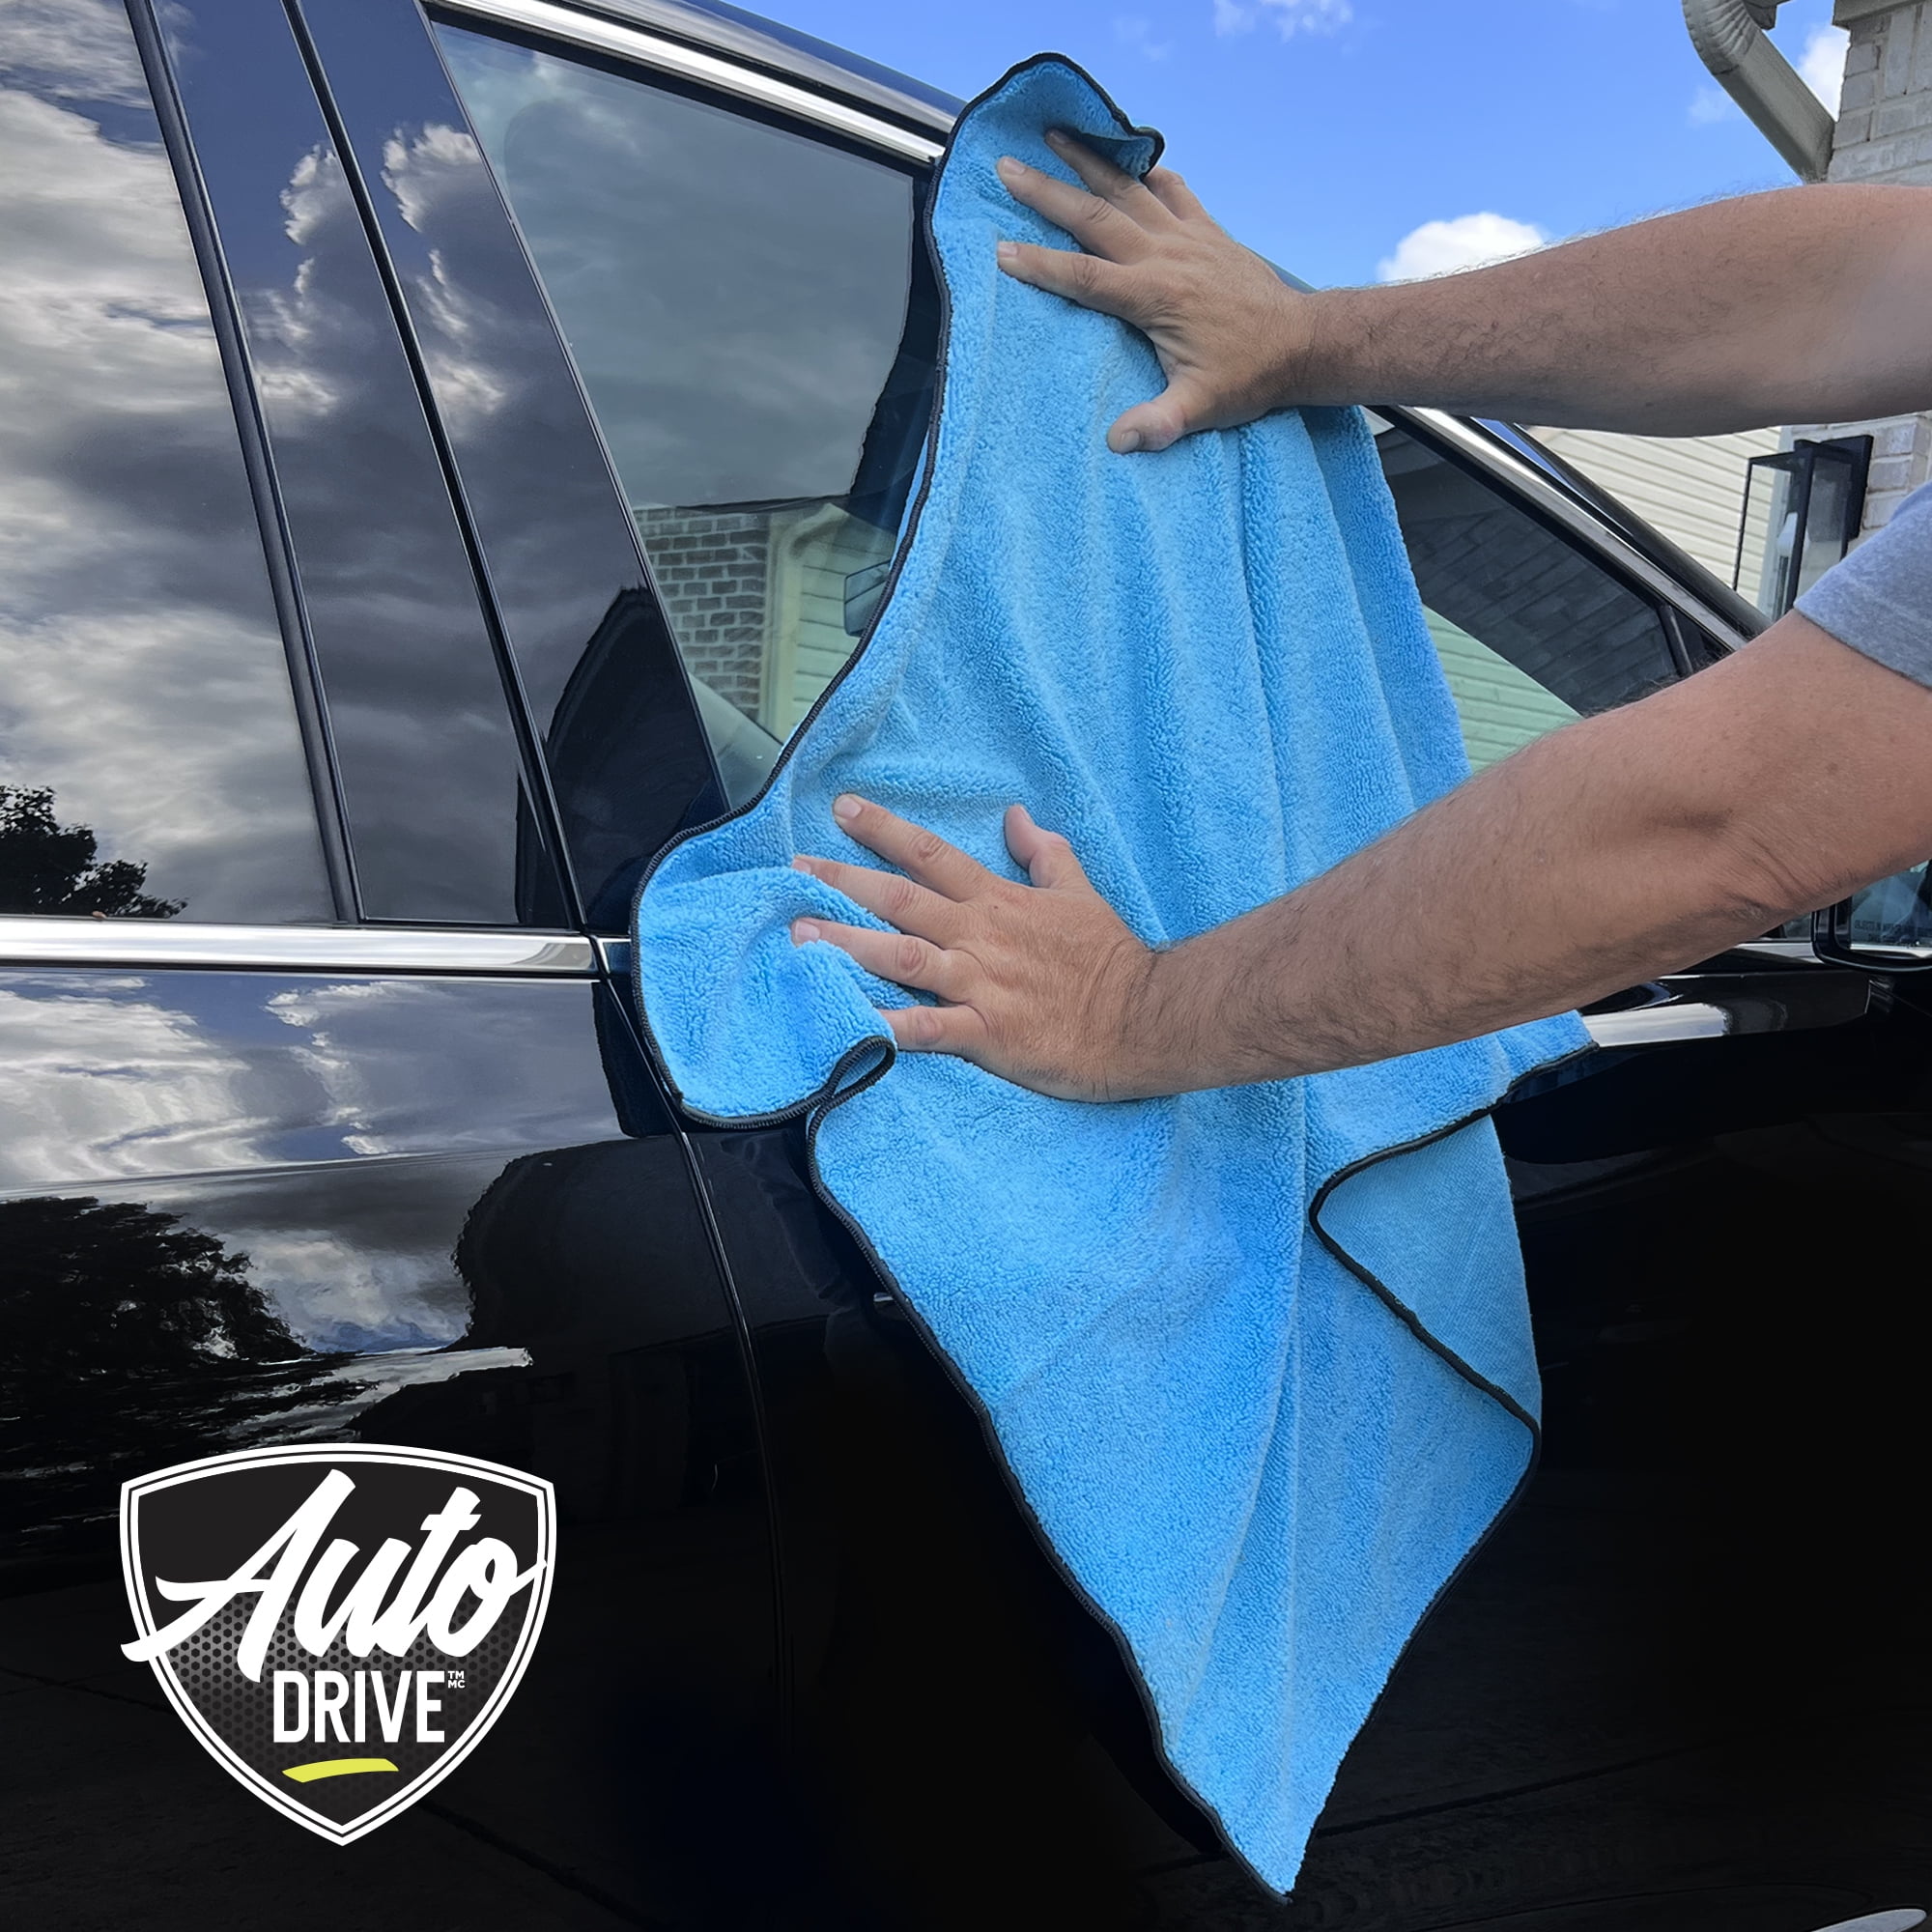 Auto Drive Large Microfiber Car Drying Towel 6SQFT, Super Absorbent, Blue